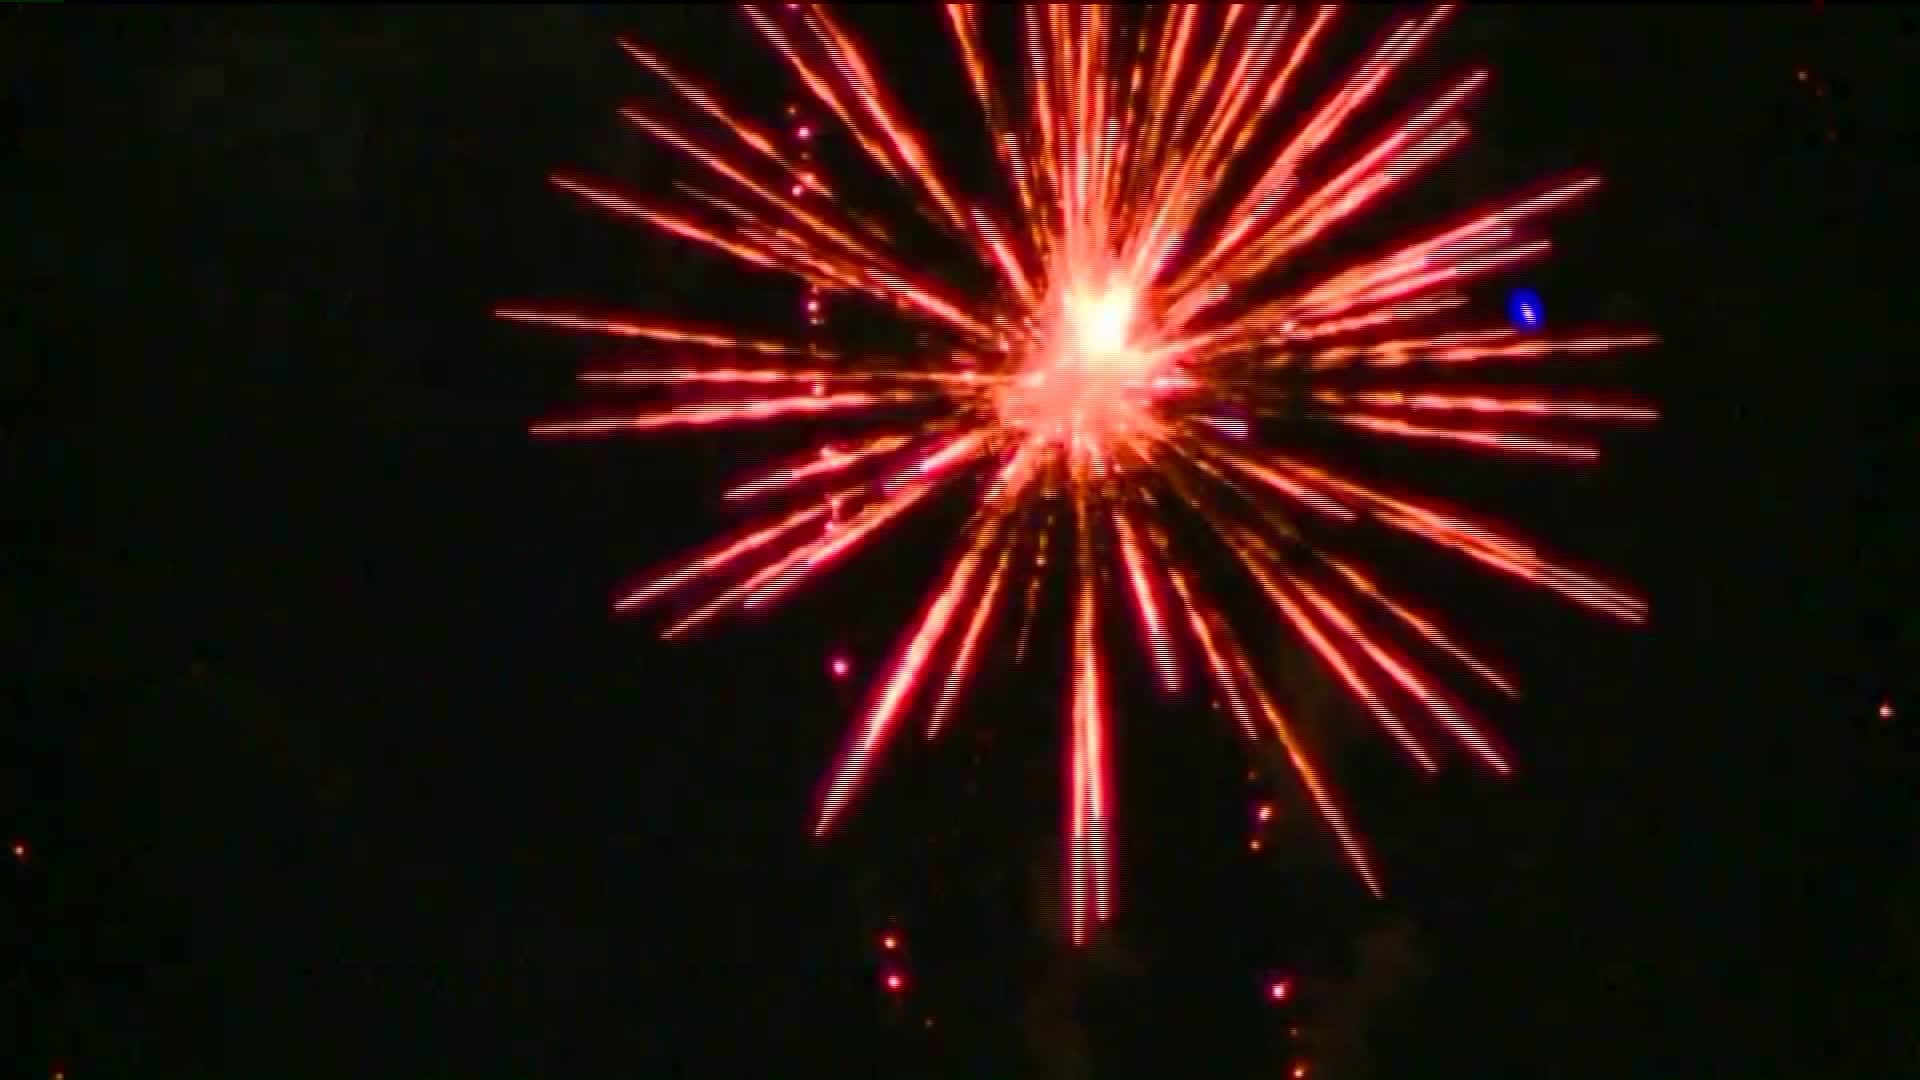 Fireworks in Meriden saved